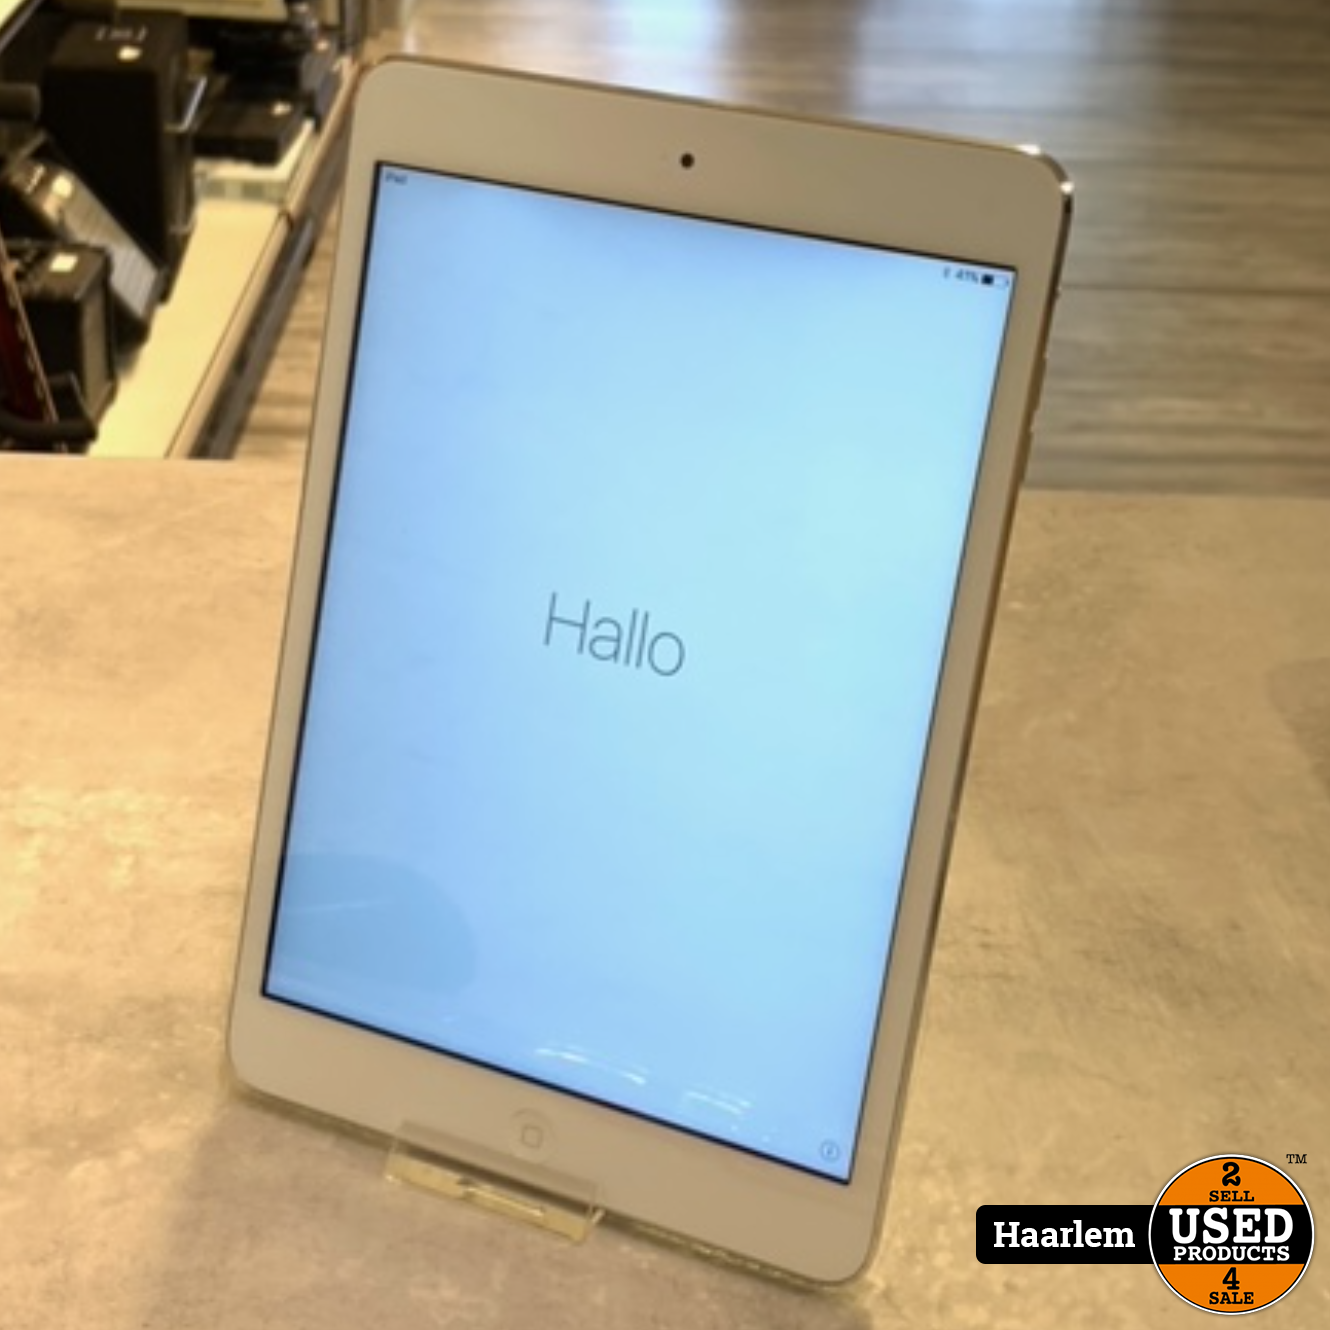 Trouw Durven ontwerp apple ipad Apple iPad Mini 2 16GB Wifi White in nette staat - Used Products  Haarlem Cronjéstraat